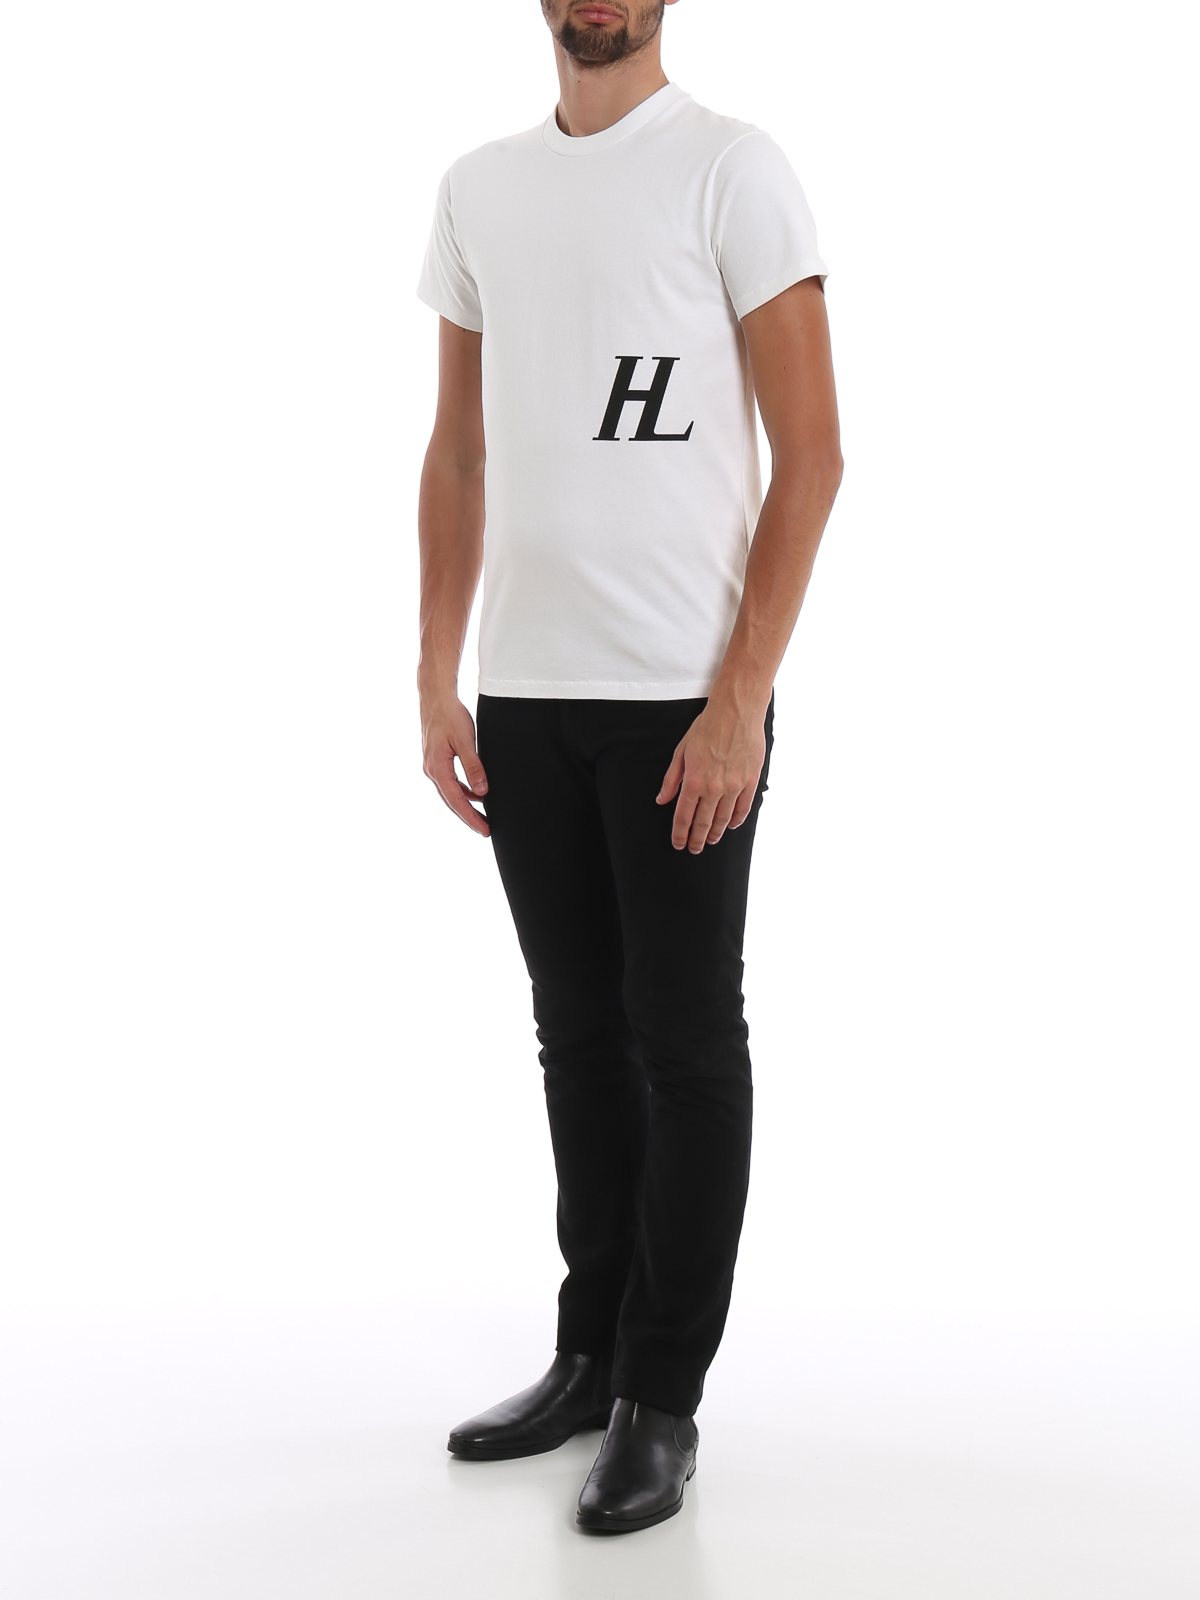 T-shirts Helmut Lang - Contrasting HL print -